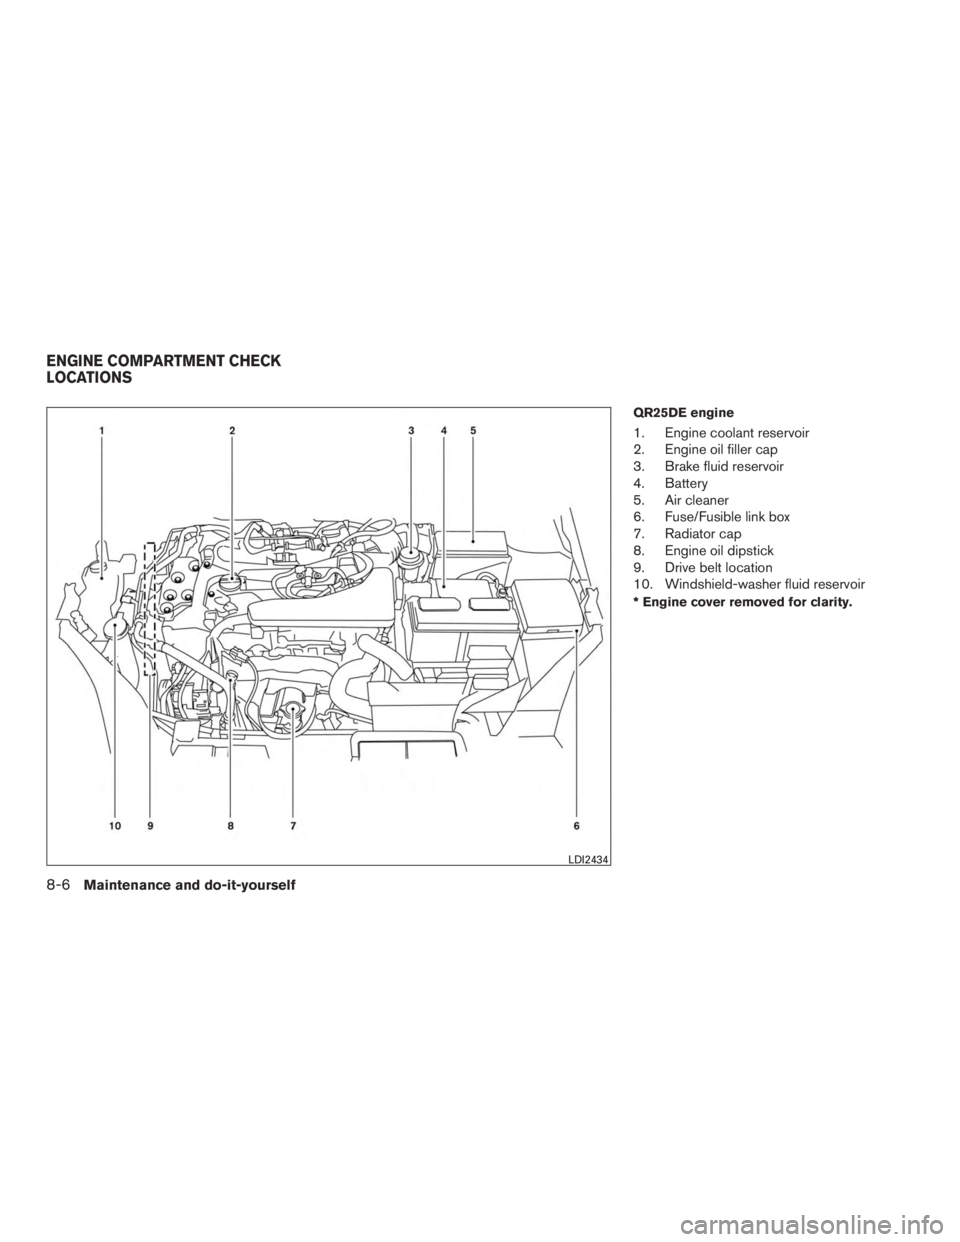 NISSAN ROGUE 2015  Owner´s Manual QR25DE engine
1. Engine coolant reservoir
2. Engine oil filler cap
3. Brake fluid reservoir
4. Battery
5. Air cleaner
6. Fuse/Fusible link box
7. Radiator cap
8. Engine oil dipstick
9. Drive belt loca